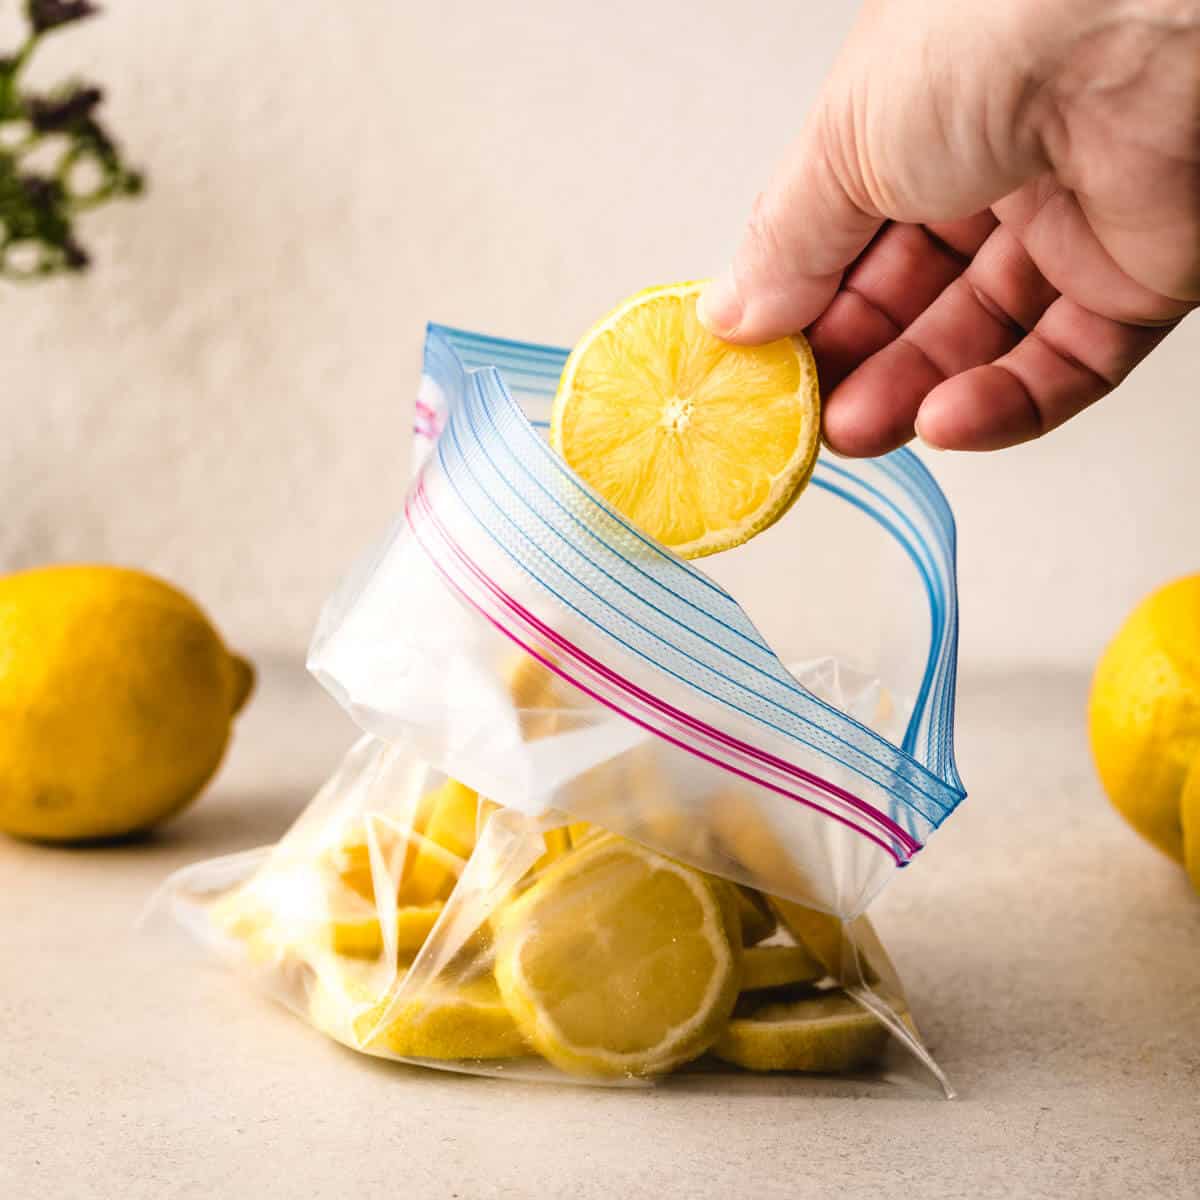 How To Store Cut Lemon In Fridge